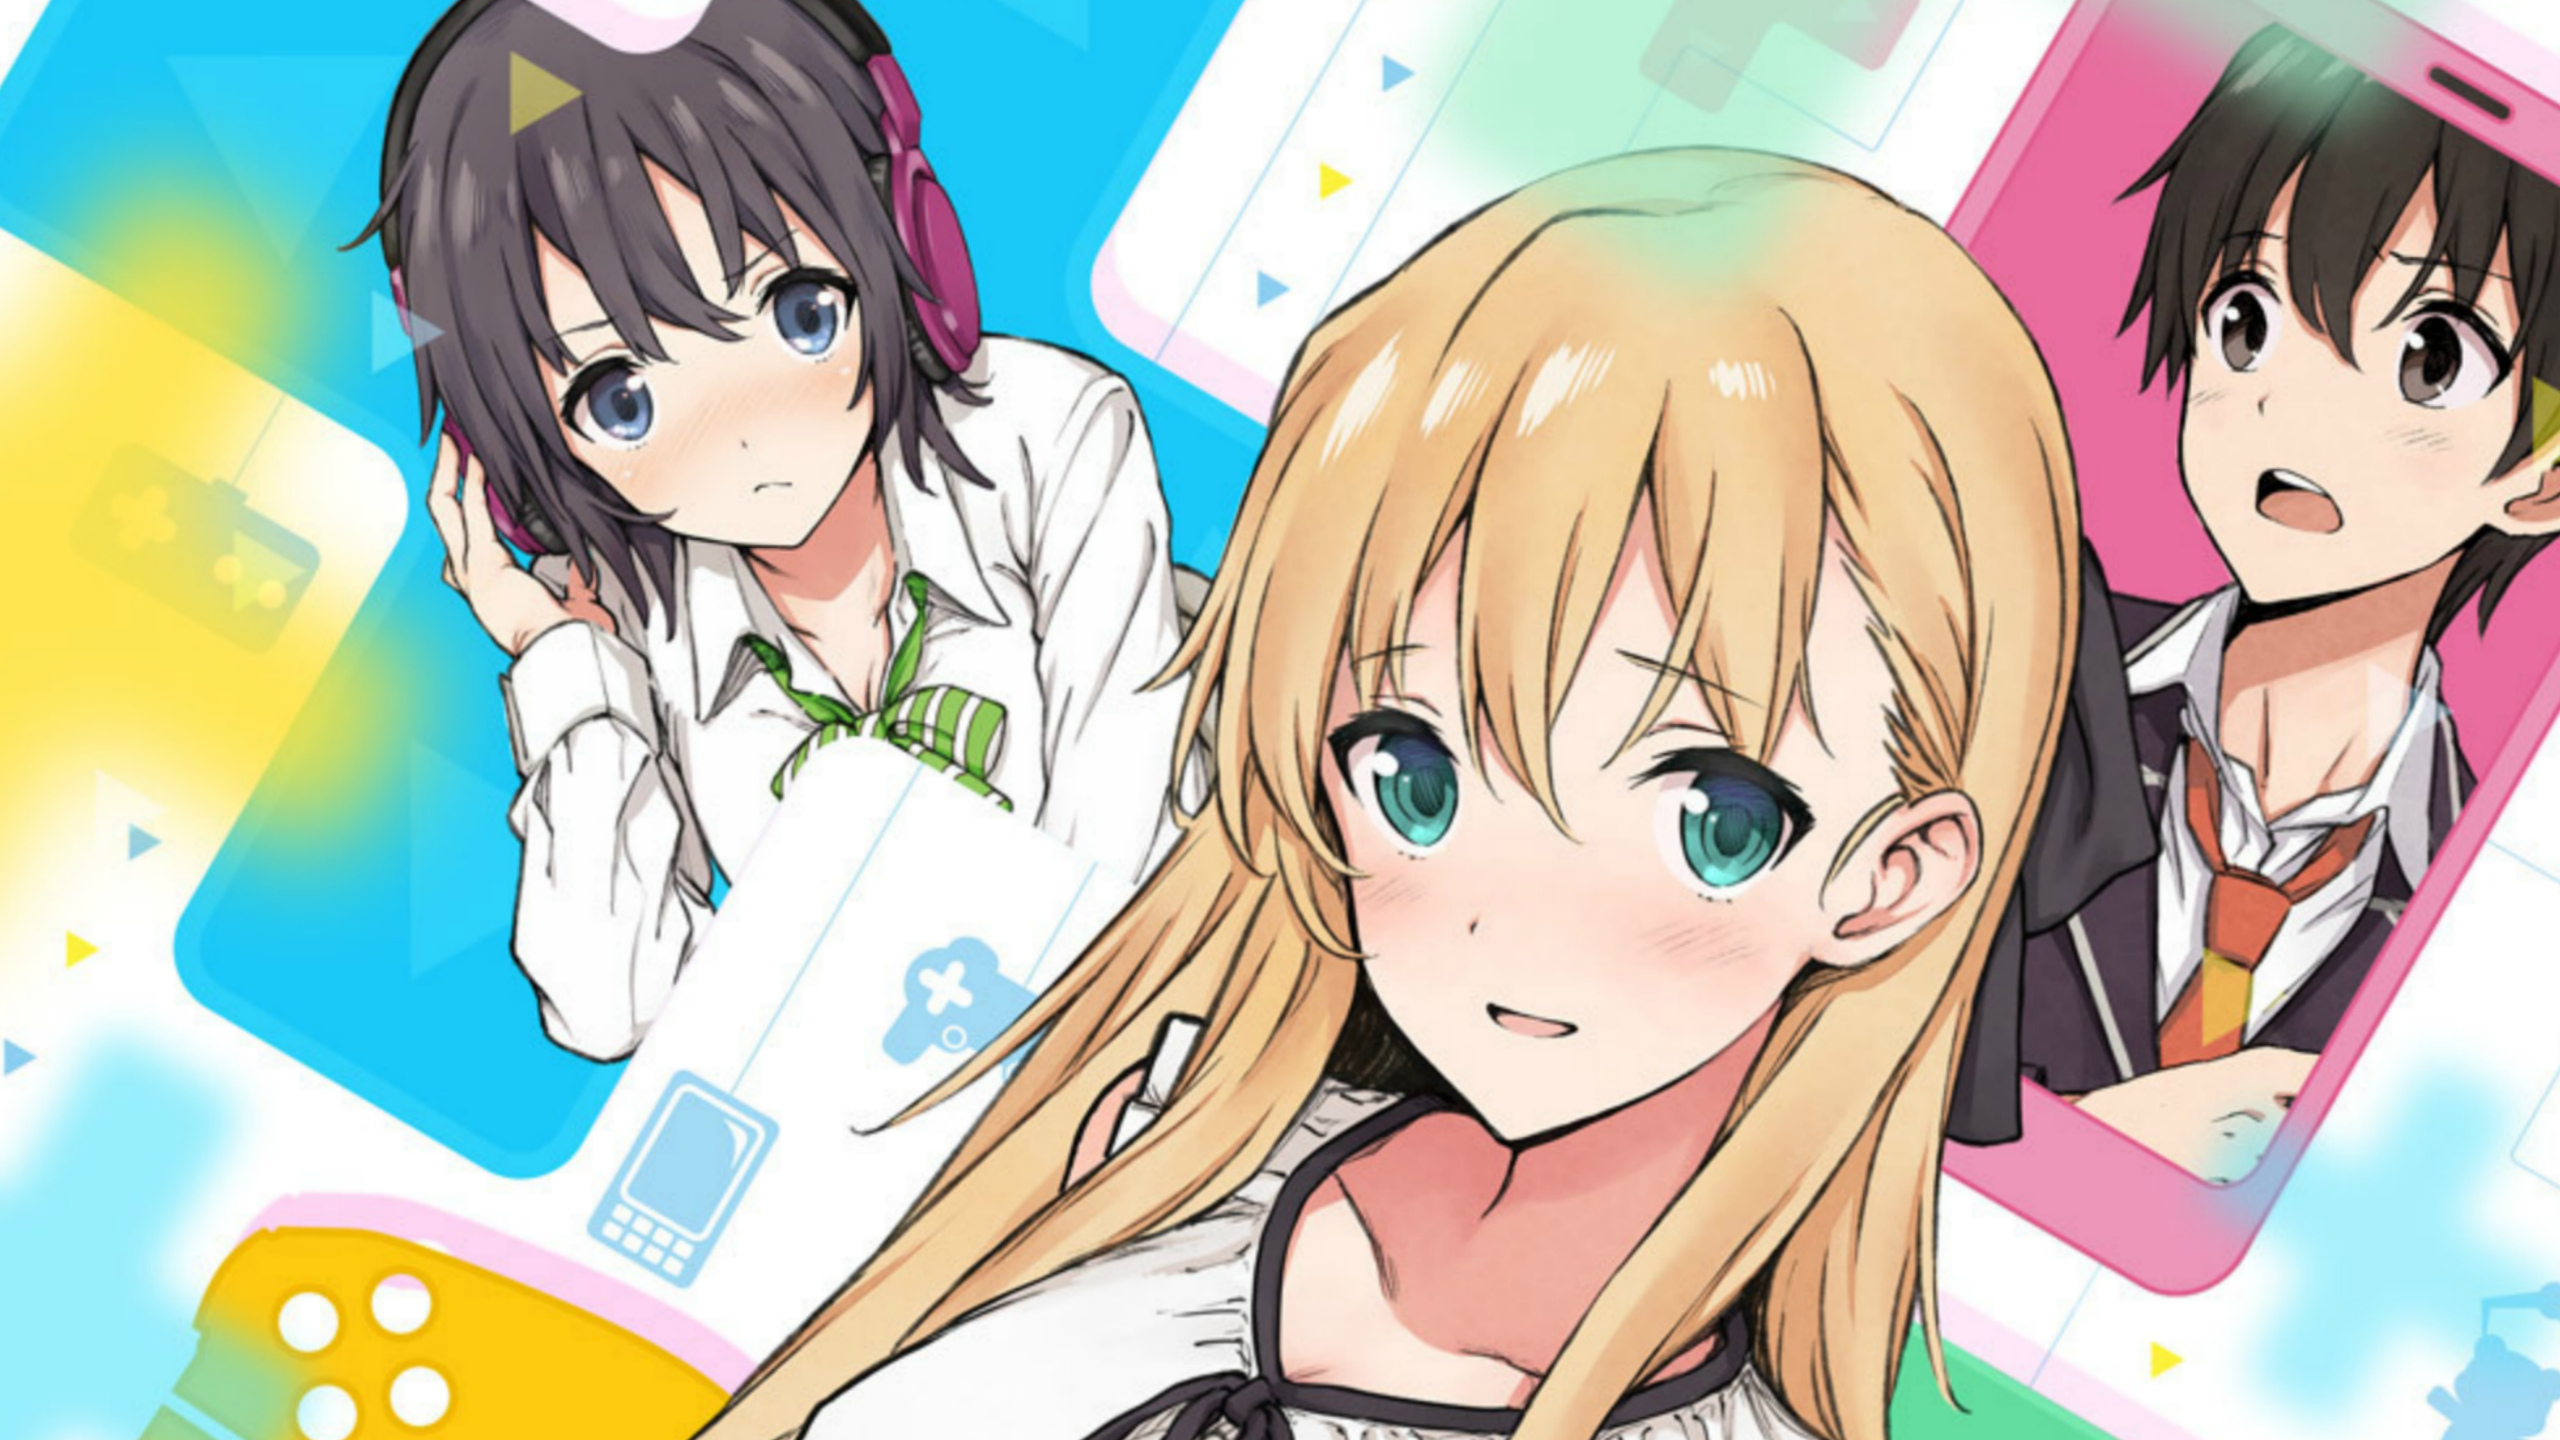 Gamers Wallpaper Anime - HD Wallpaper 